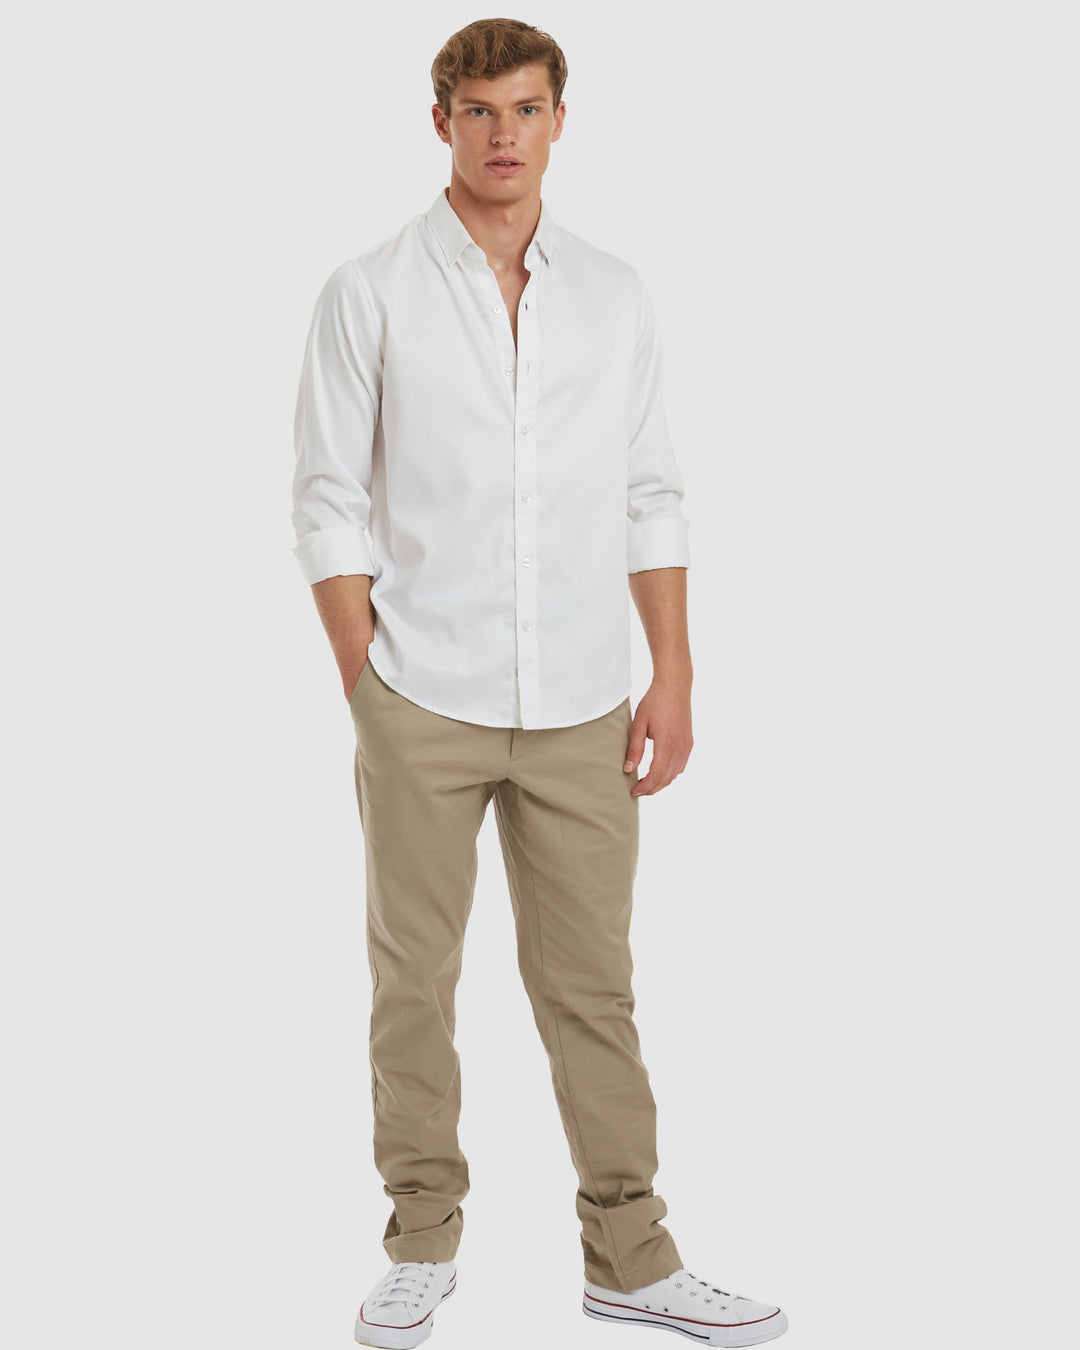 London-Slim Formal White Non Iron Cotton Shirt